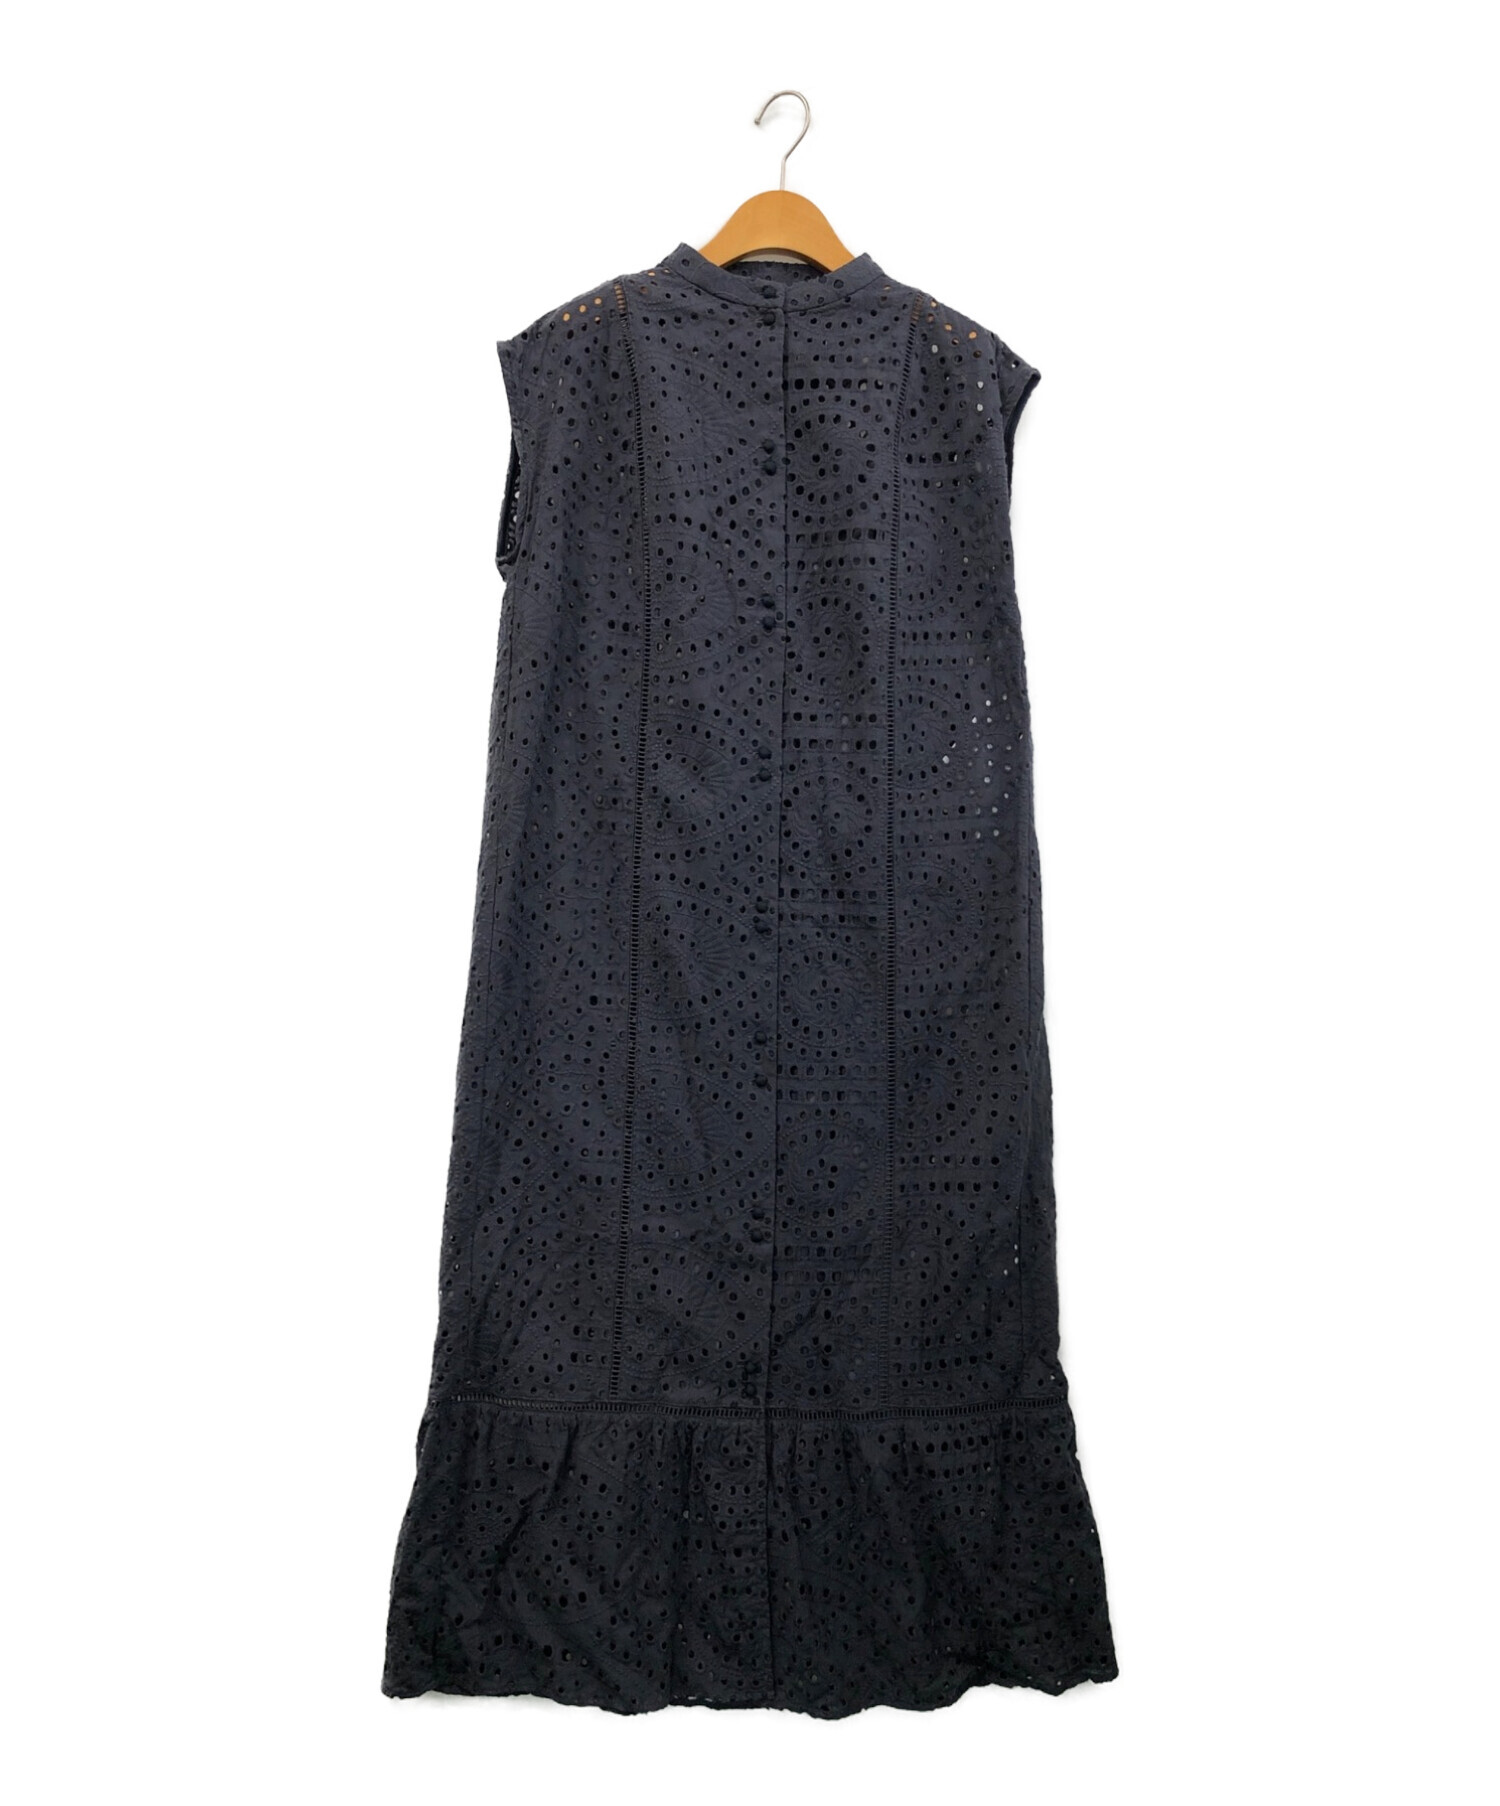 AMERI (アメリ) EYELET LACE SHIRT DRESS ブラック サイズ:M